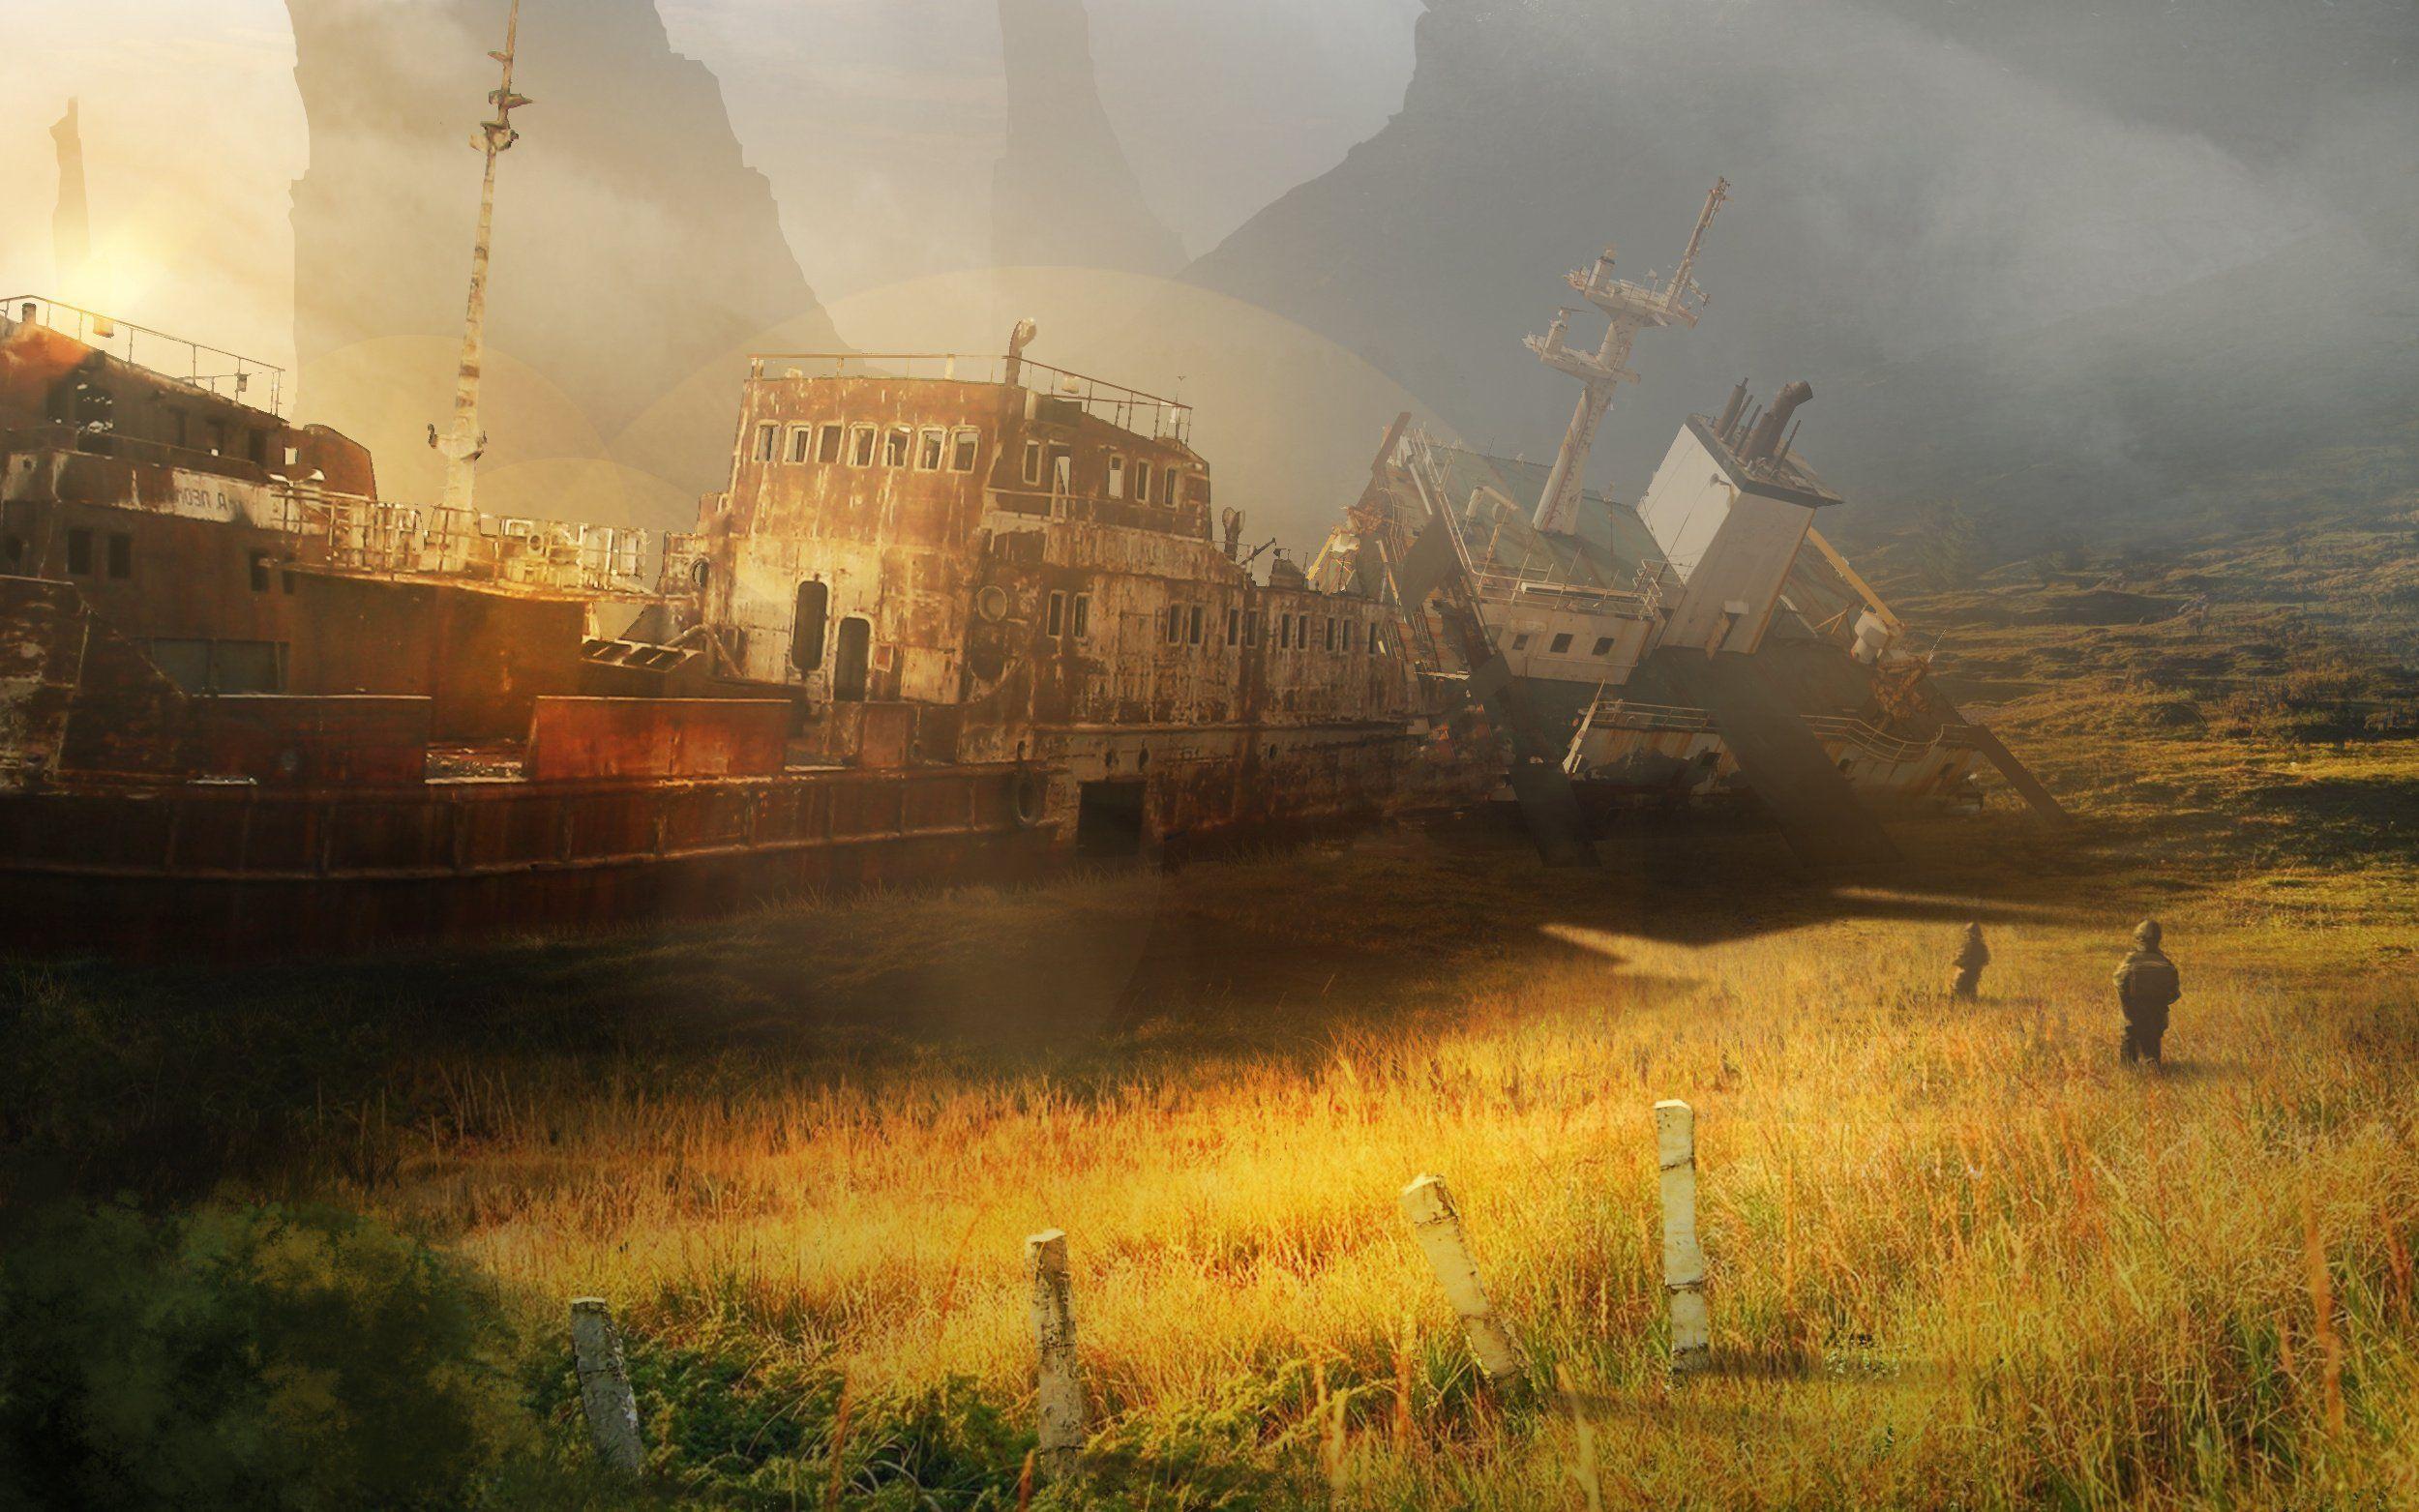 Stalker Ship Wasteland Sci Fi Apocalyptic Boat Wallpaper